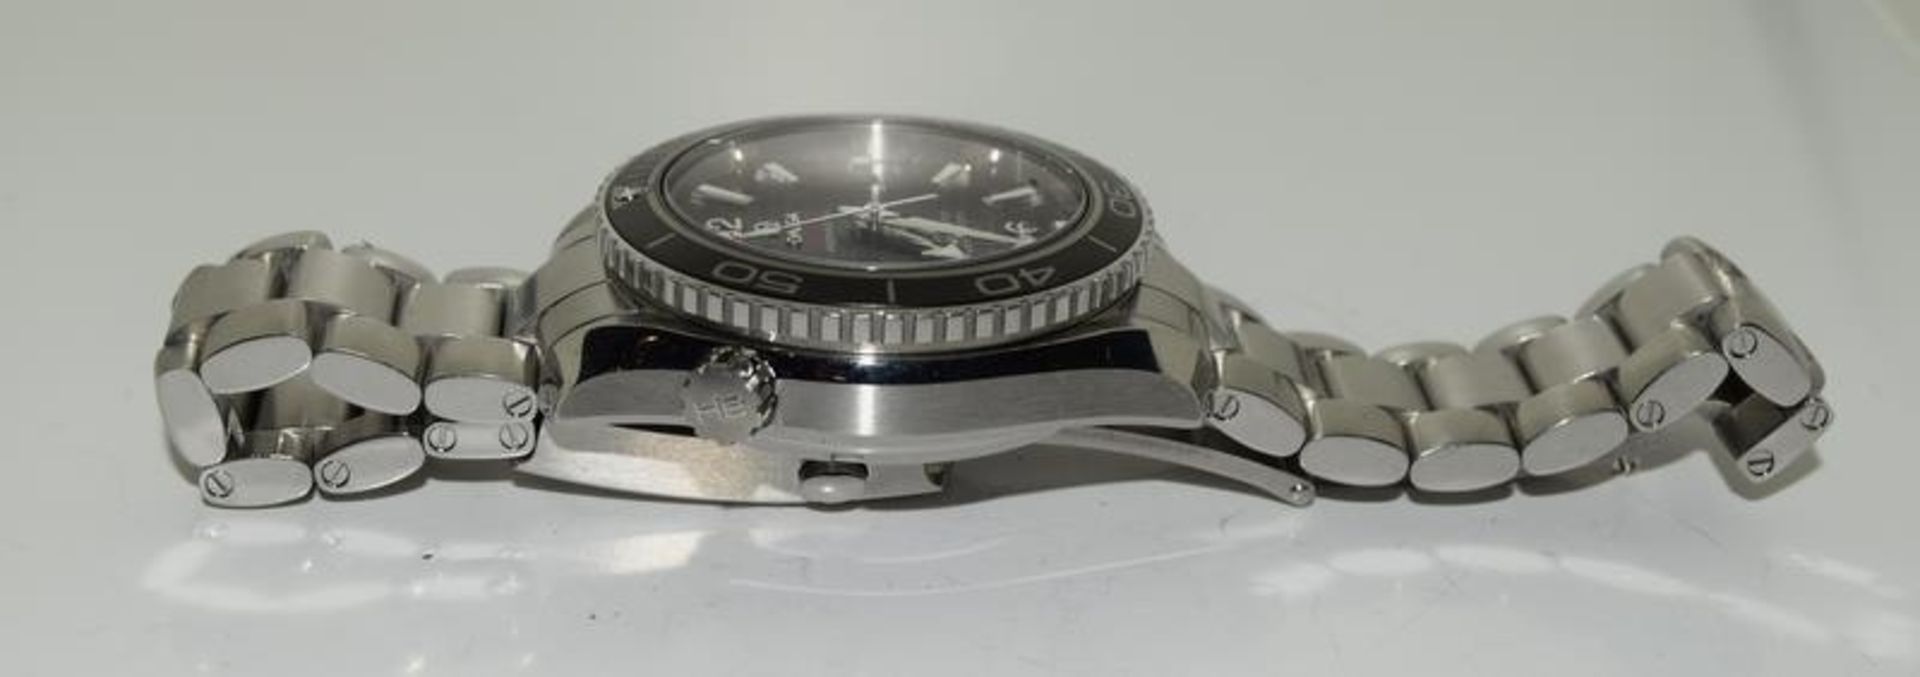 James Bond Skyfall Omega Planet Ocean Limited Edition 0778/5007 wrist watch, 42mm diameter, 2012 - Image 6 of 10